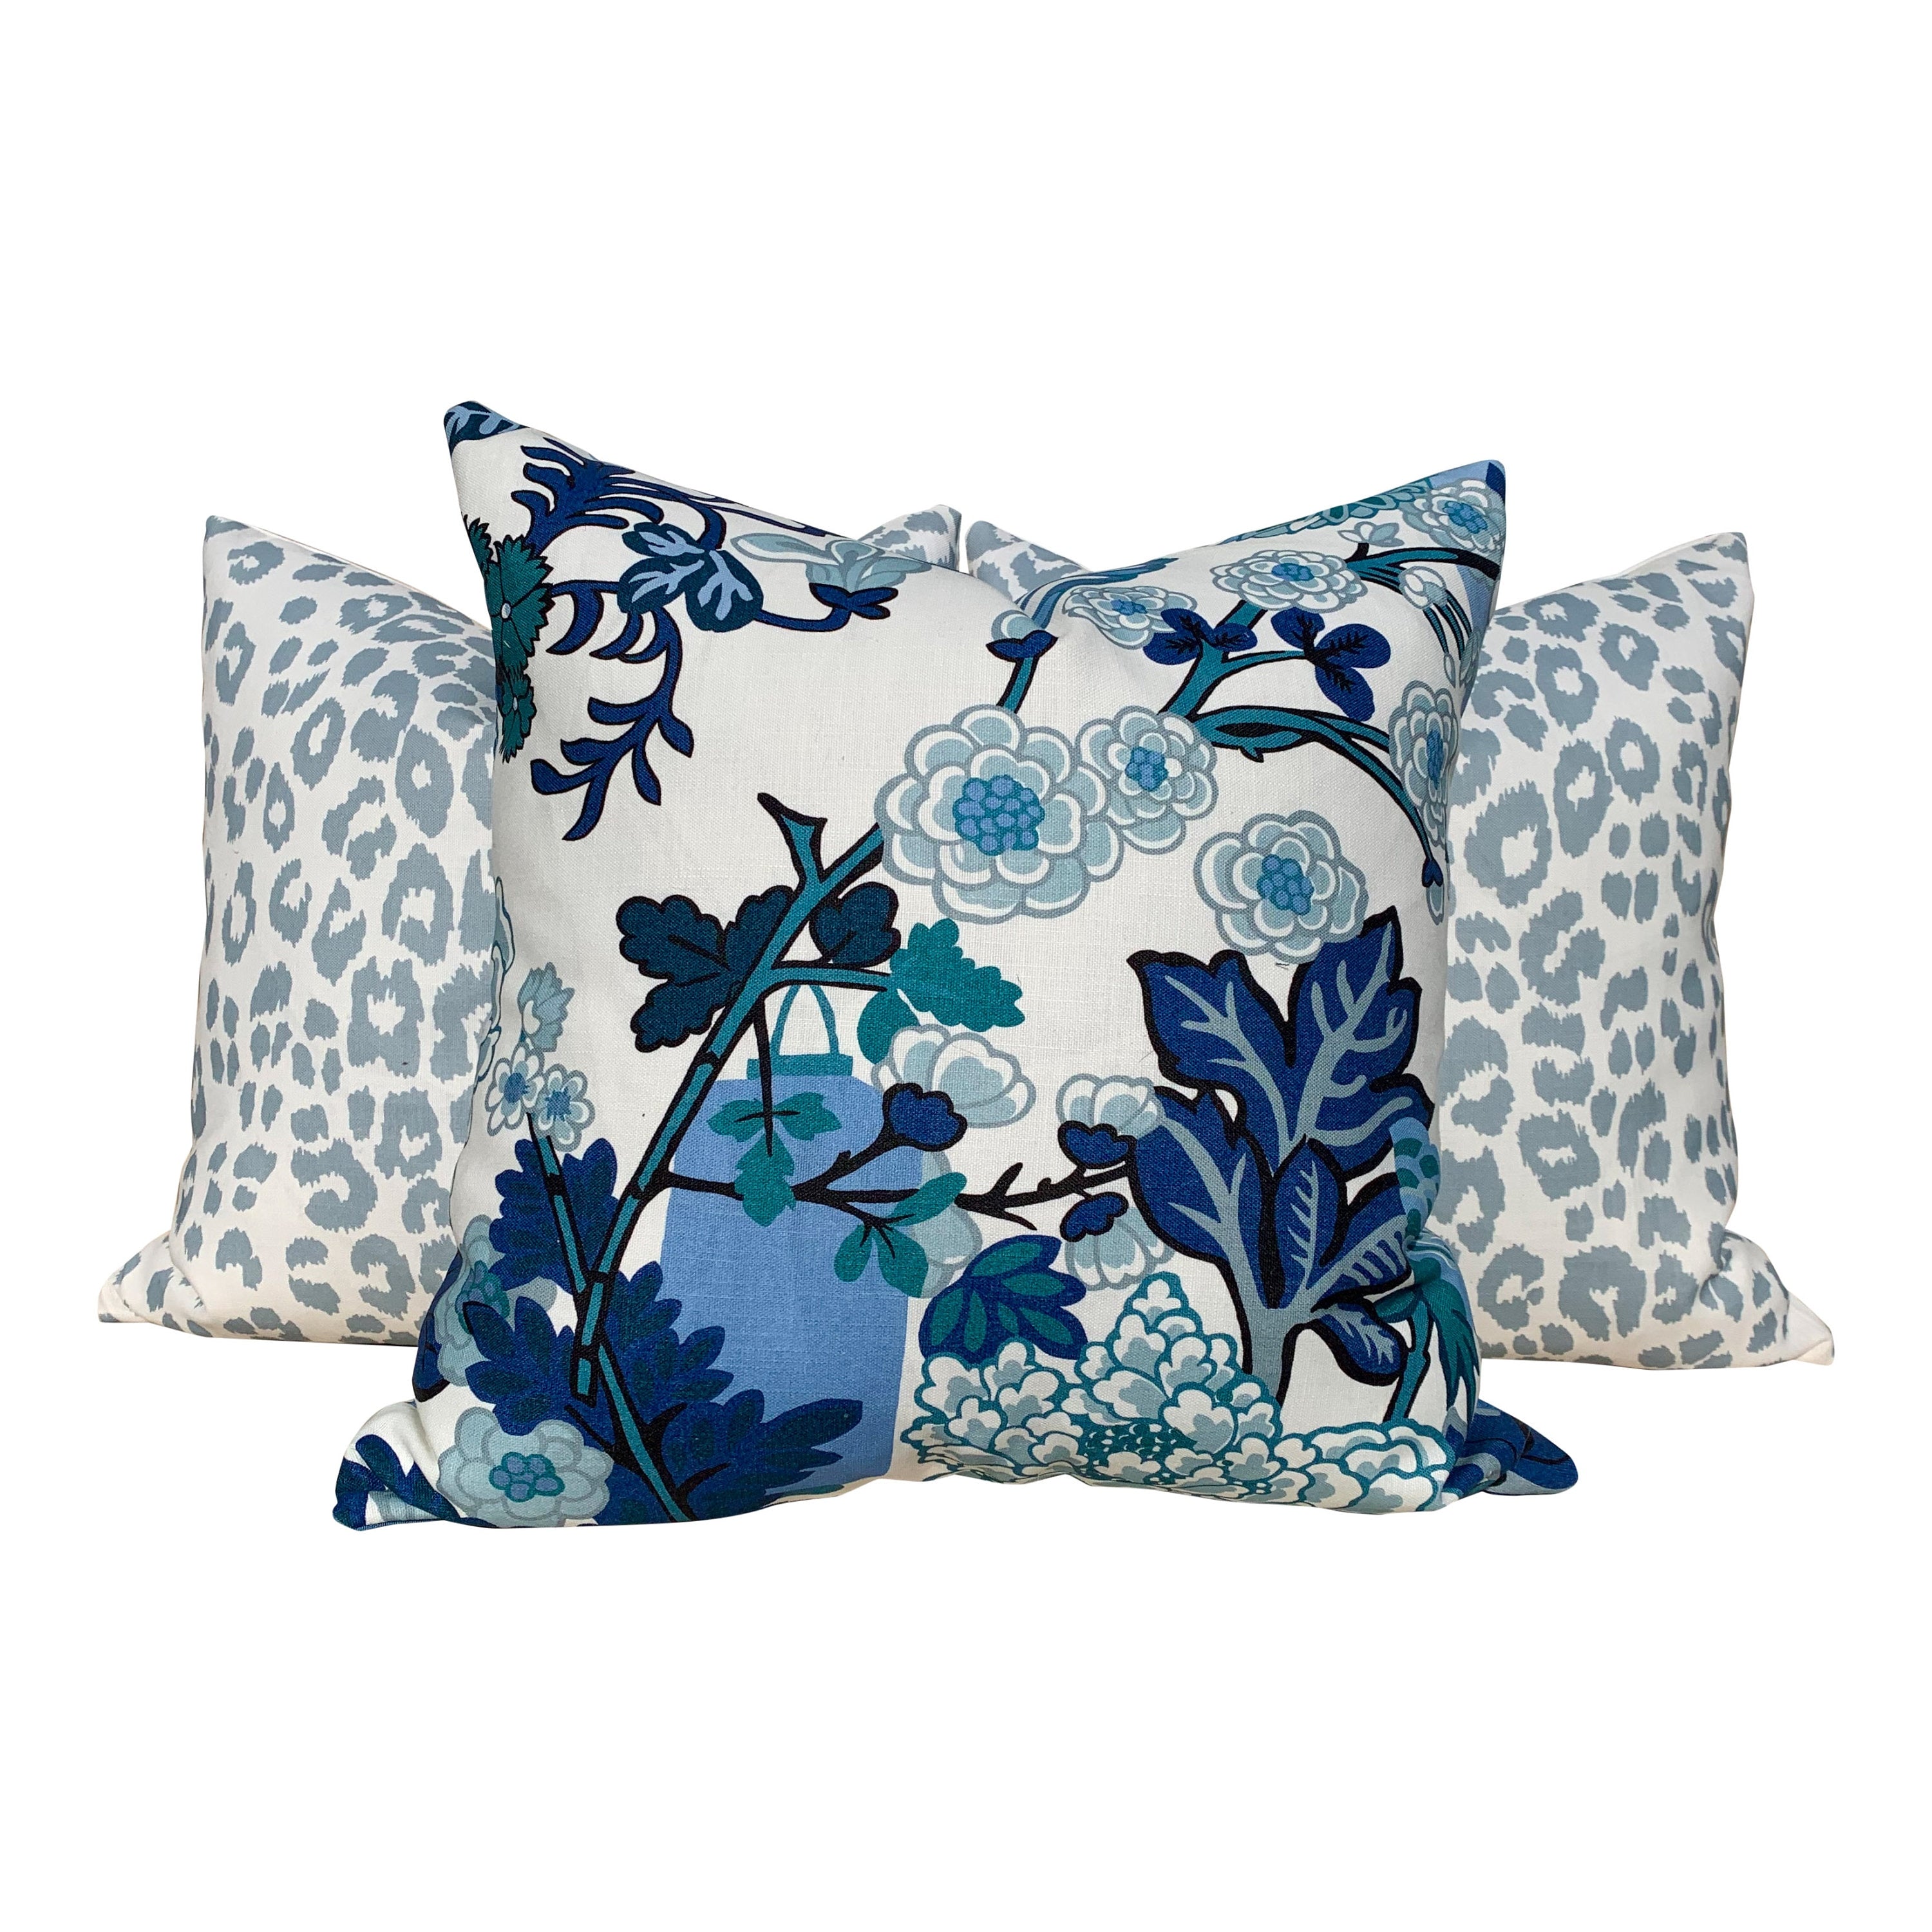 Schumacher Outdoor Chang Mai Dragon Linen Pillow Blue, Teal. Accent Lumbar Pillow. Decorative cushion. Designer Pillows. Lumbar Pillow.